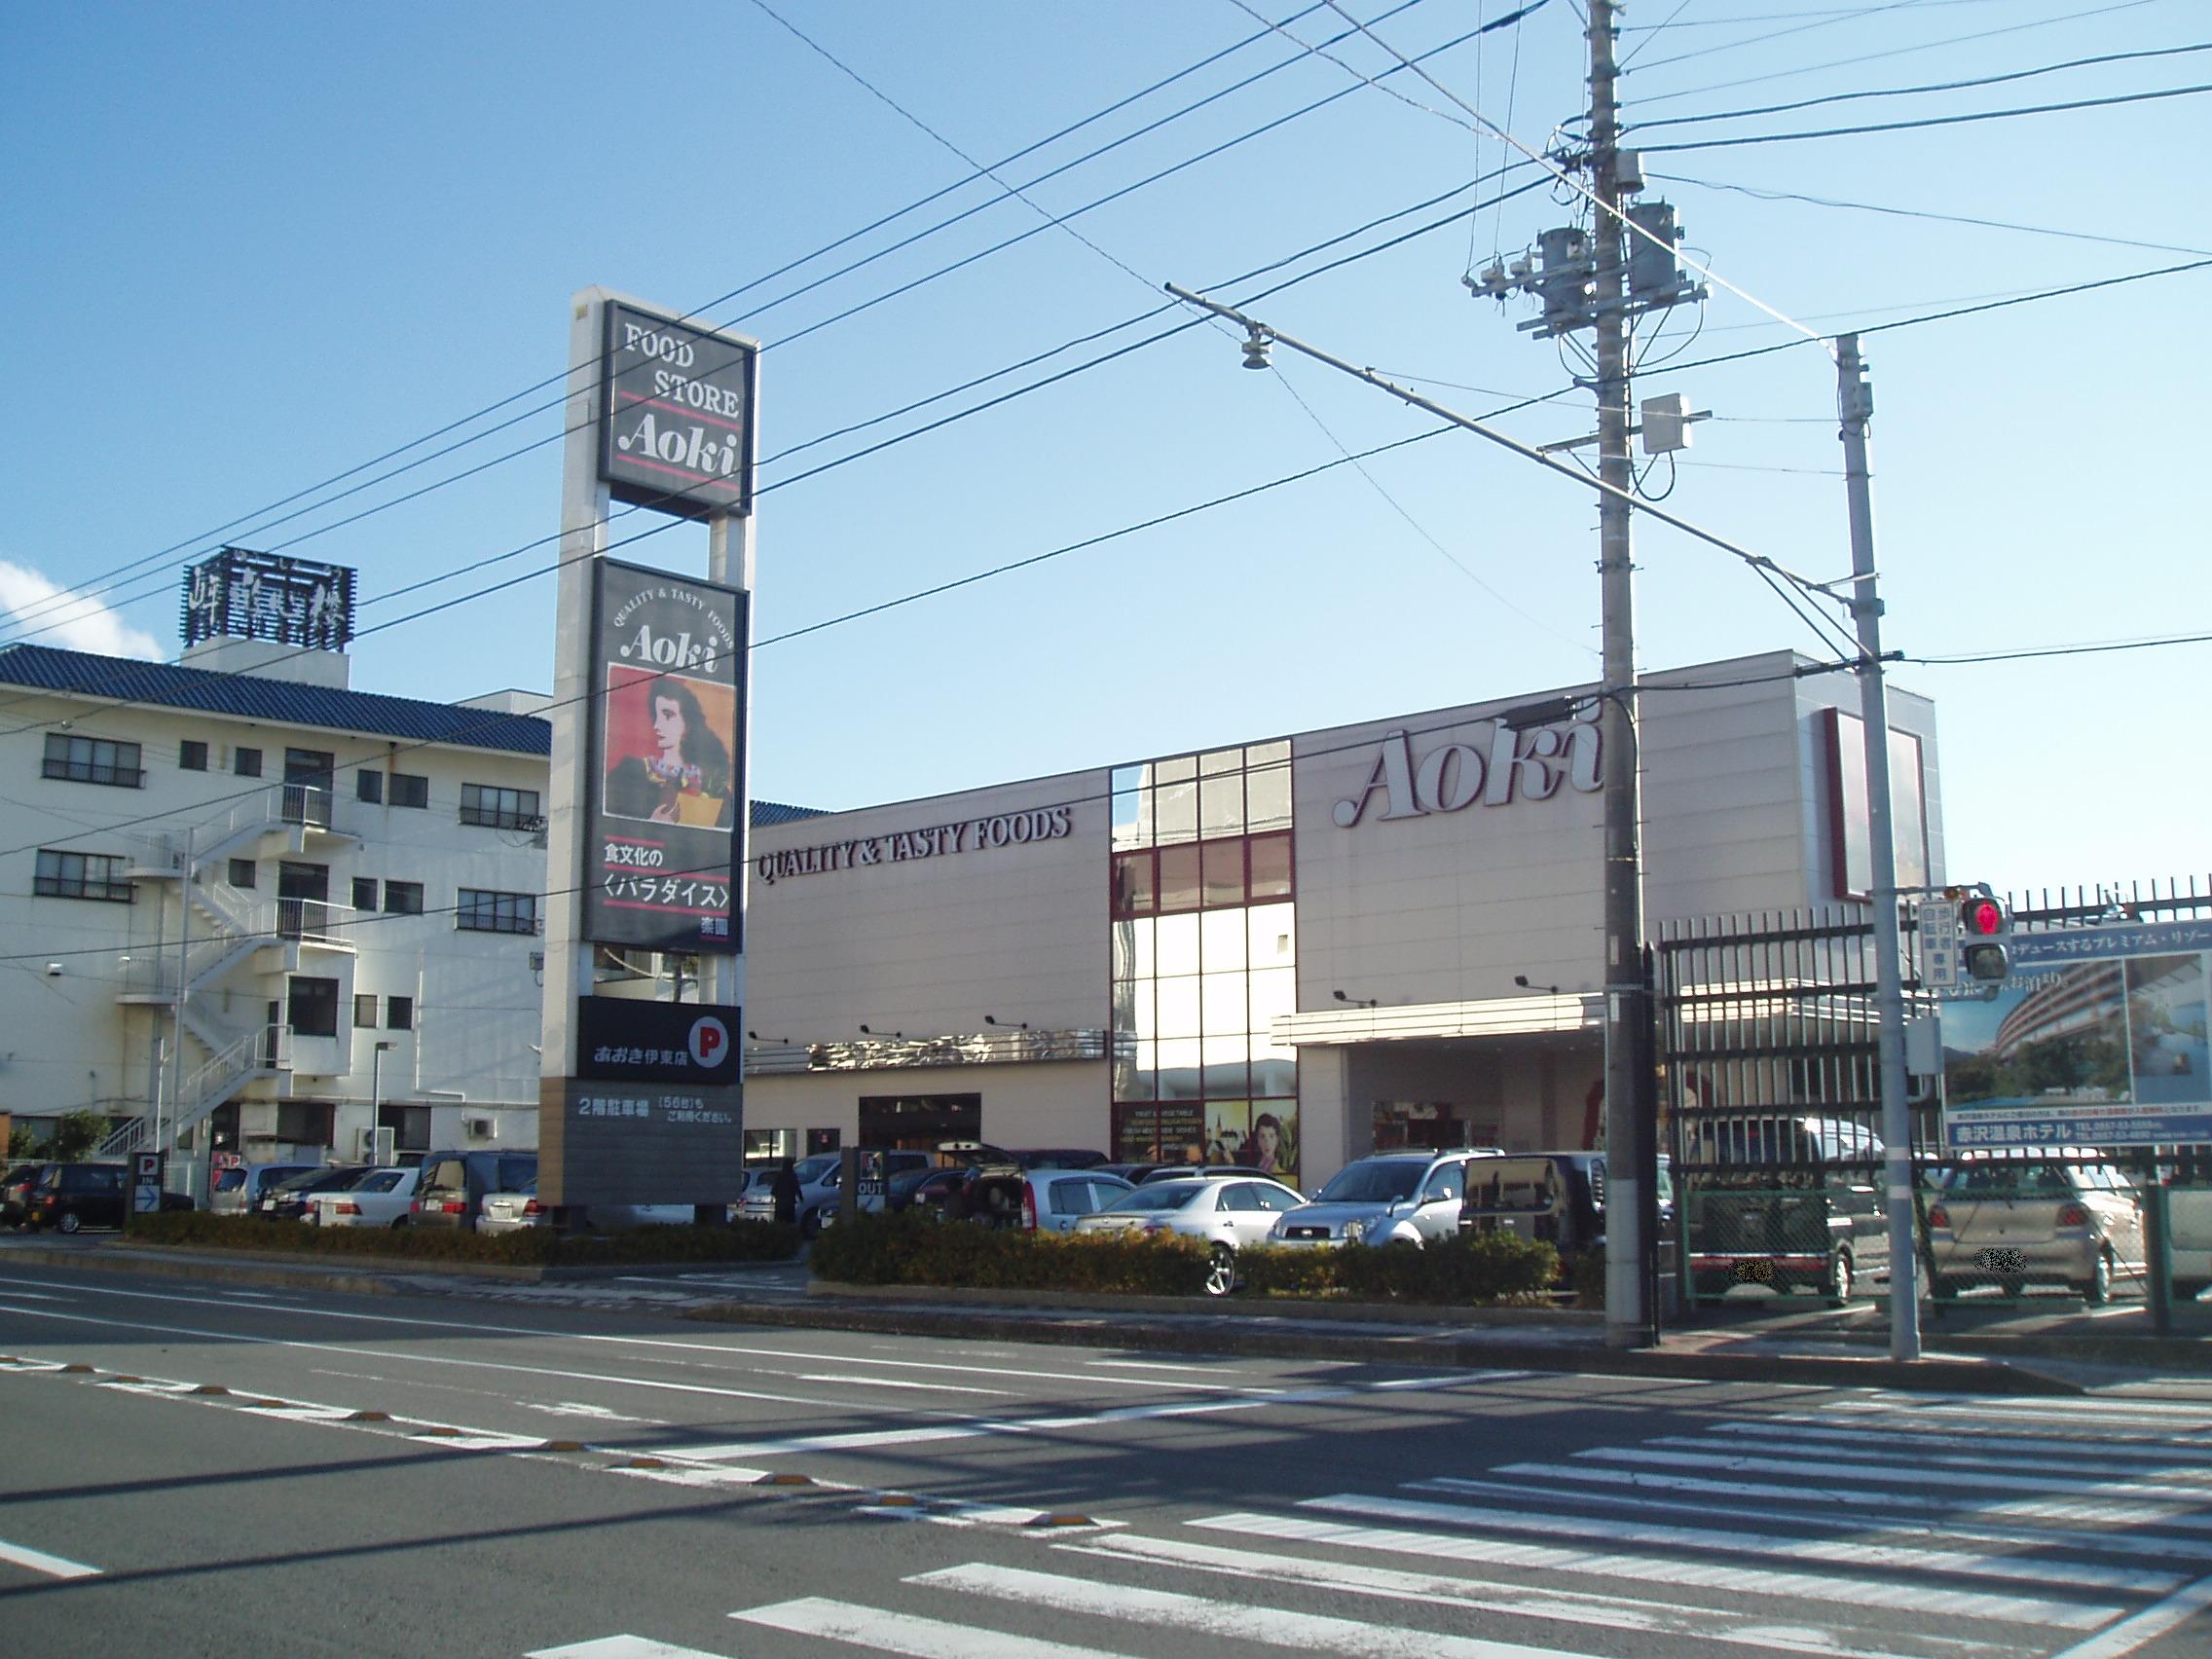 Supermarket. Food store Aoki Ito store (supermarket) to 341m